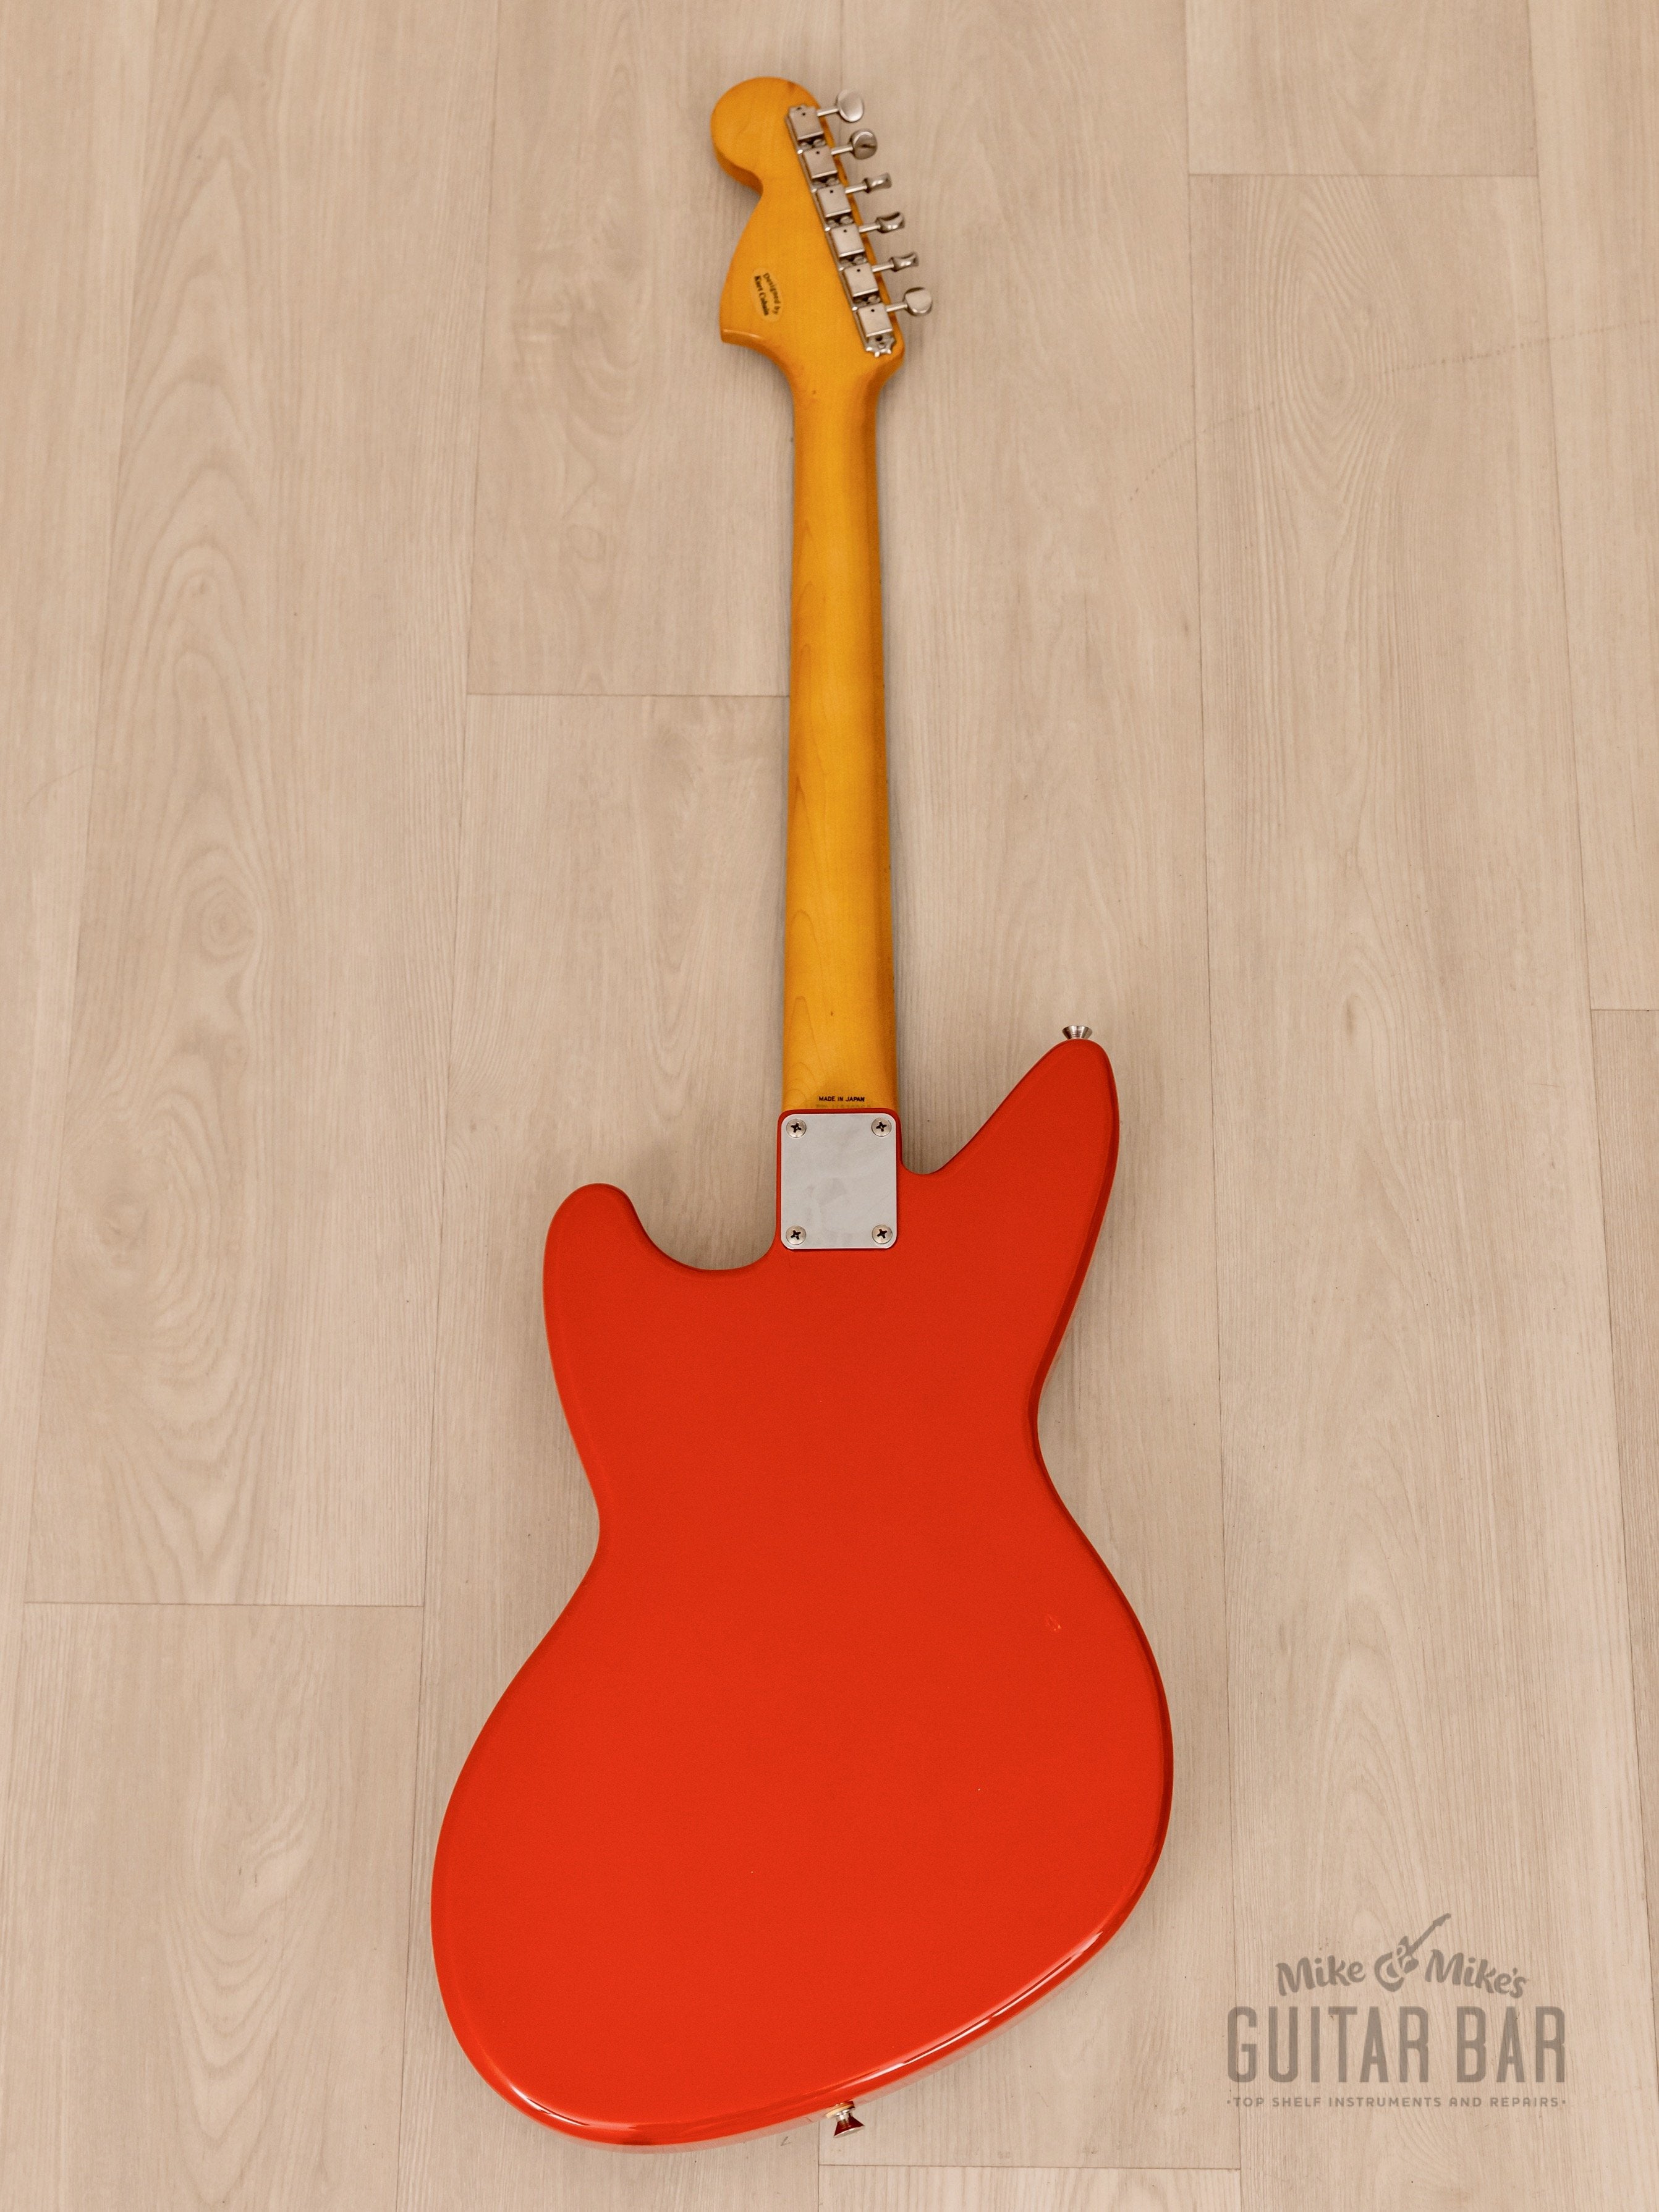 1996 Fender Jag-Stang JGS-65 Kurt Cobain Signature Offset Guitar Fiesta Red, 1st Year, Japan MIJ